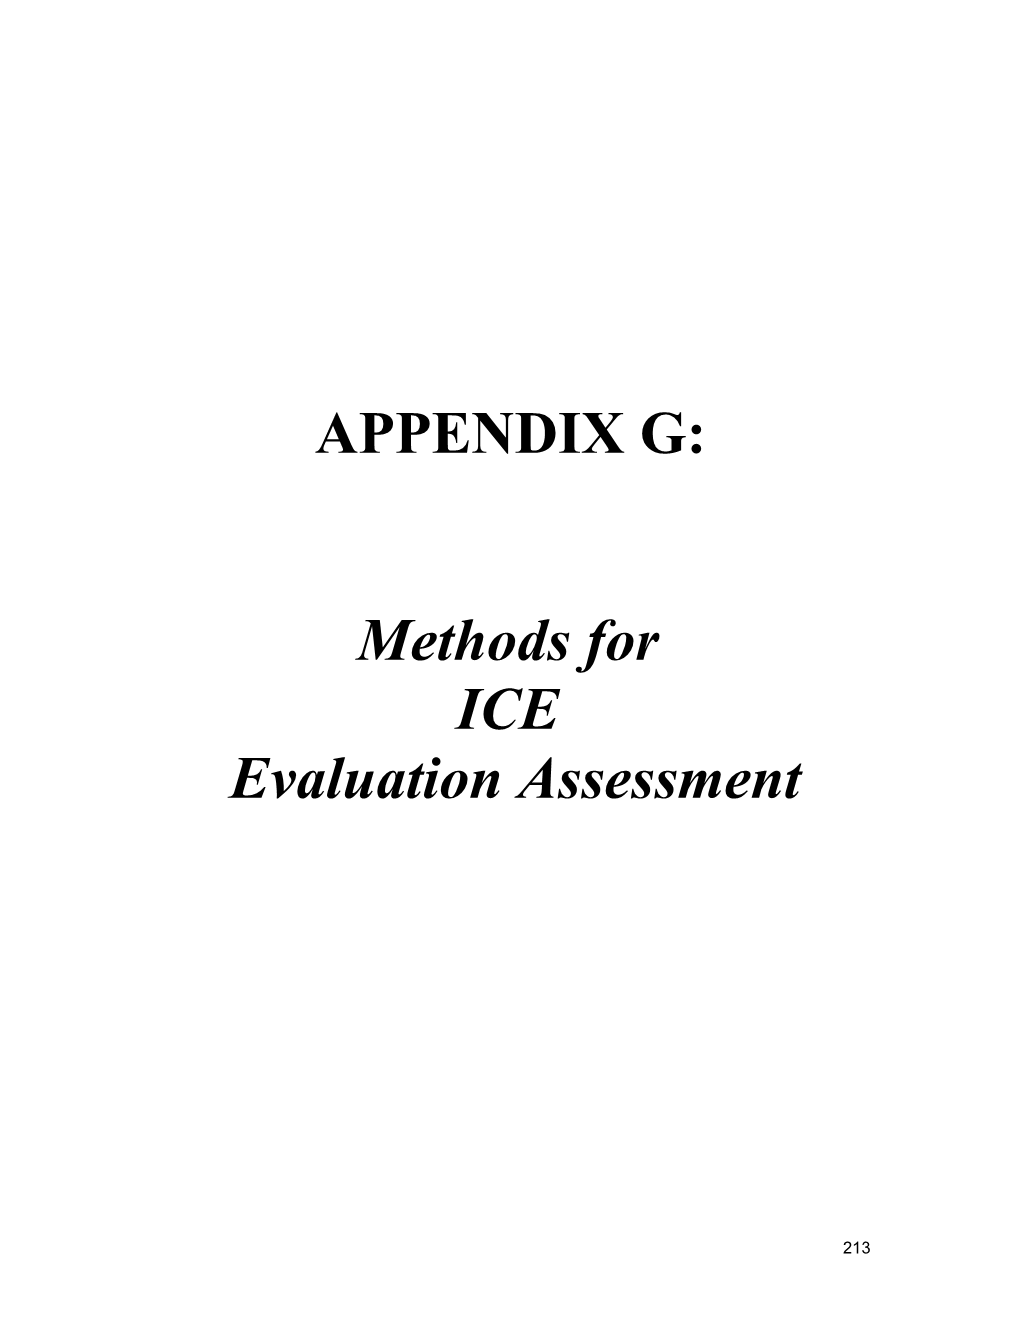 Evaluation Assessment